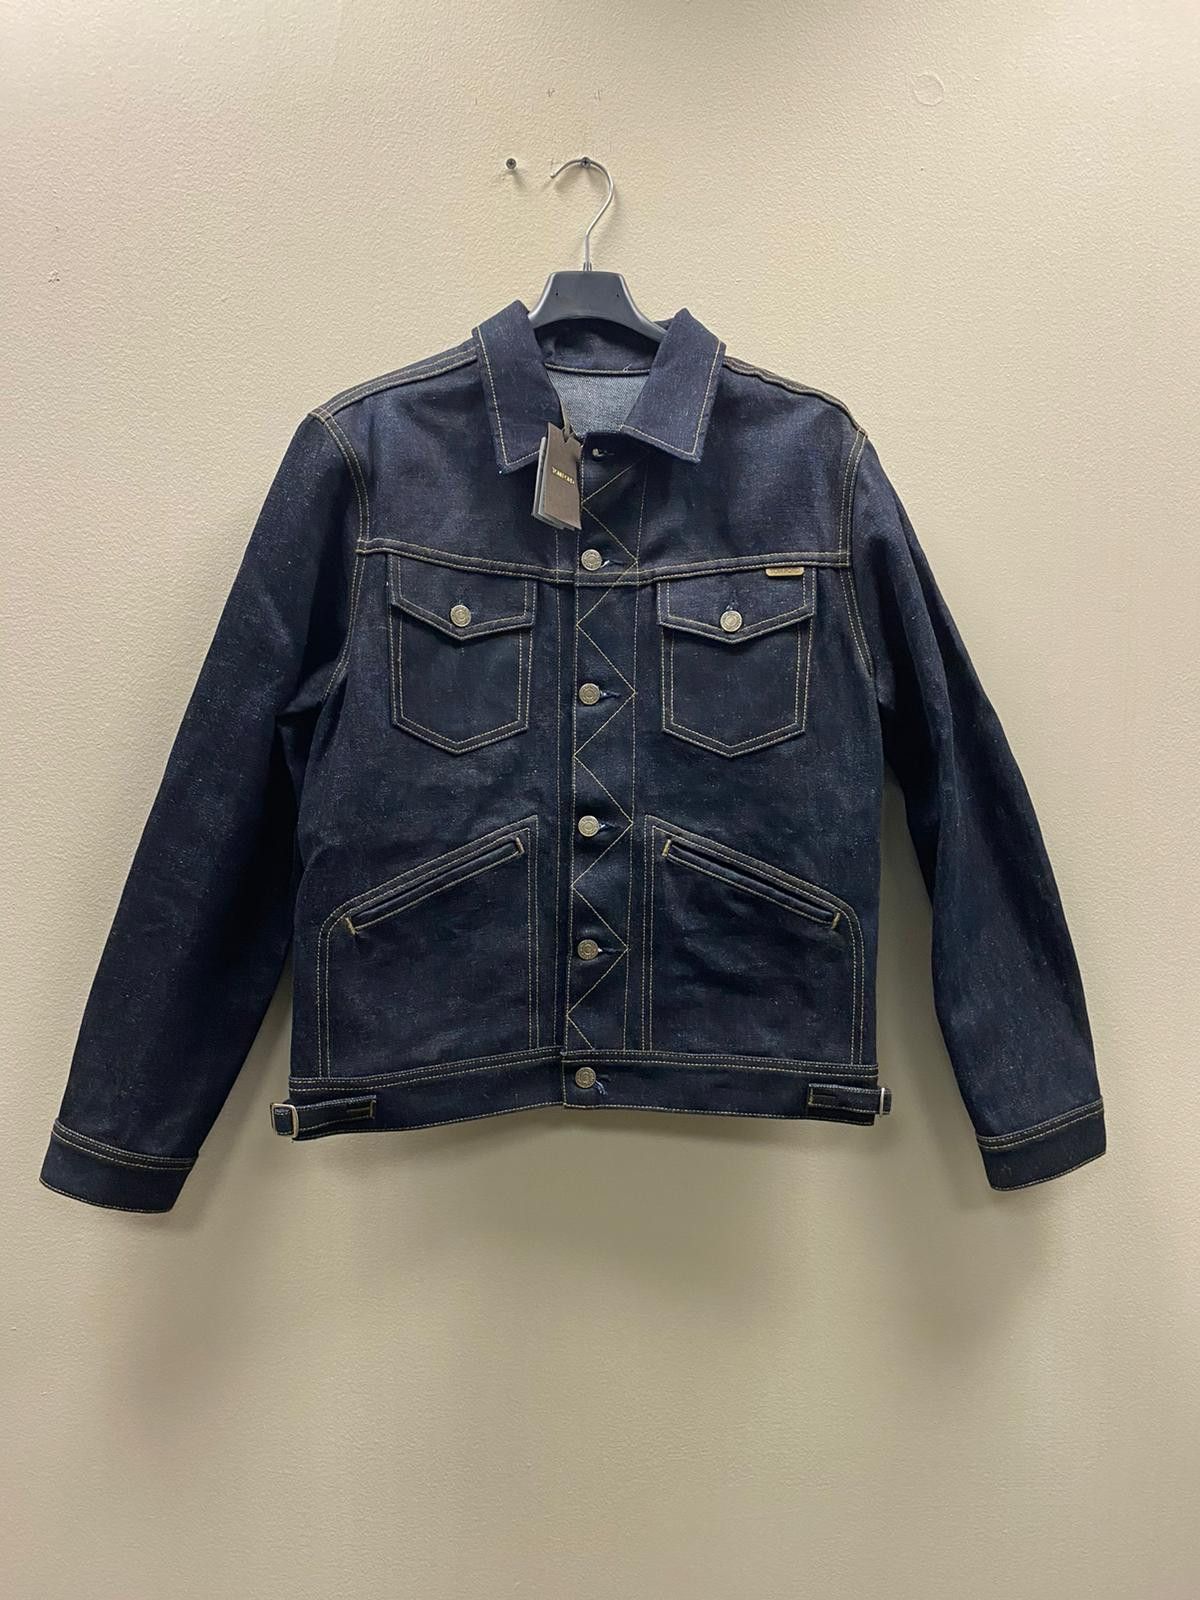 Tom Ford Classic Denim Jacket in Indigo Size US M / EU 48-50 / 2 - 16 Thumbnail